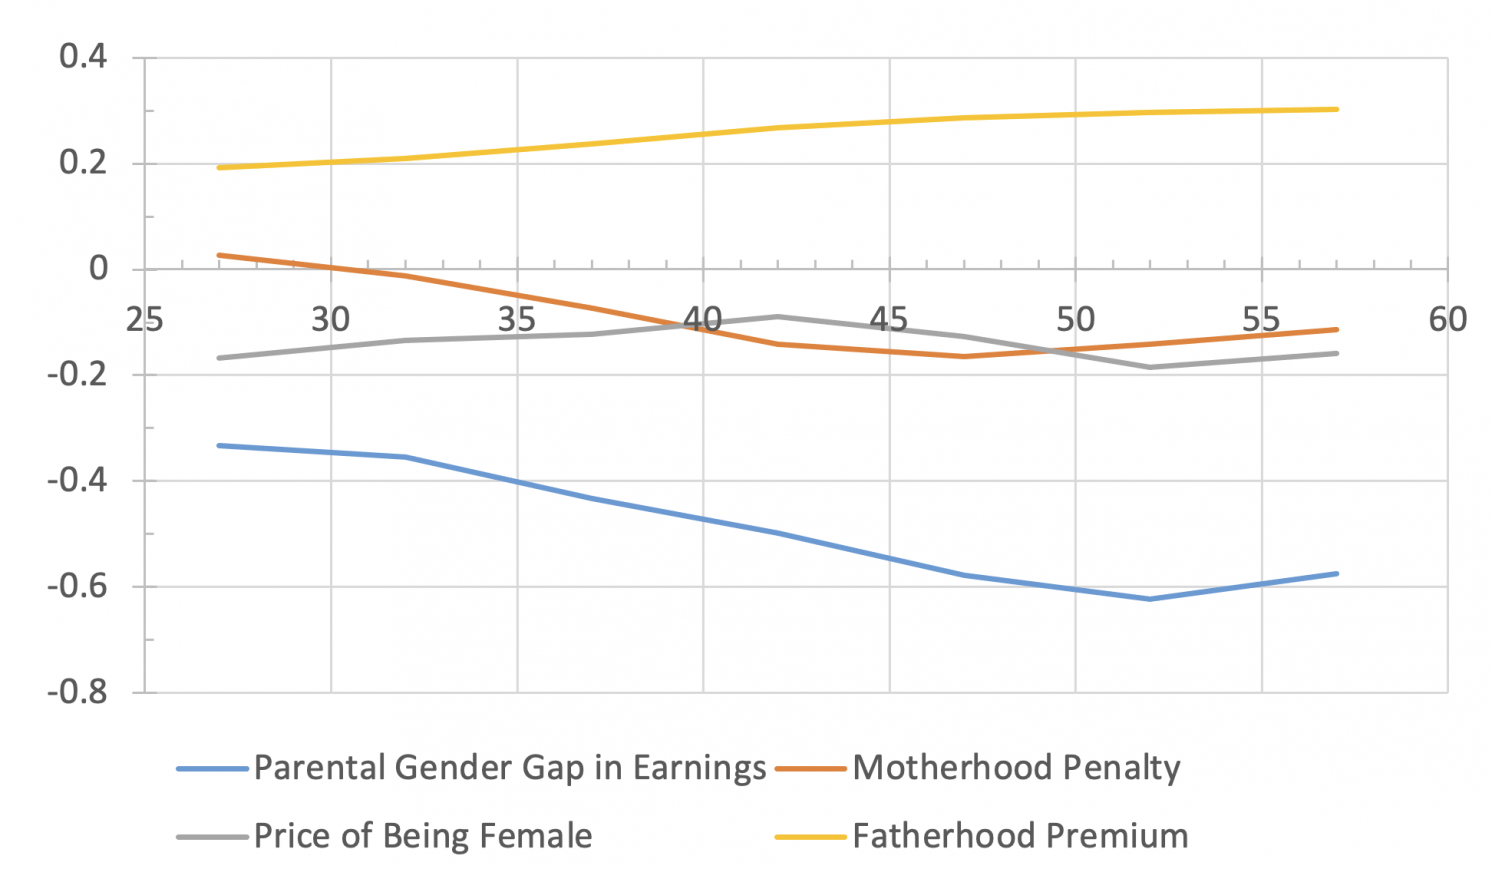 Figure 3a Parental gender gap in earnings: Time-sensitive occupations